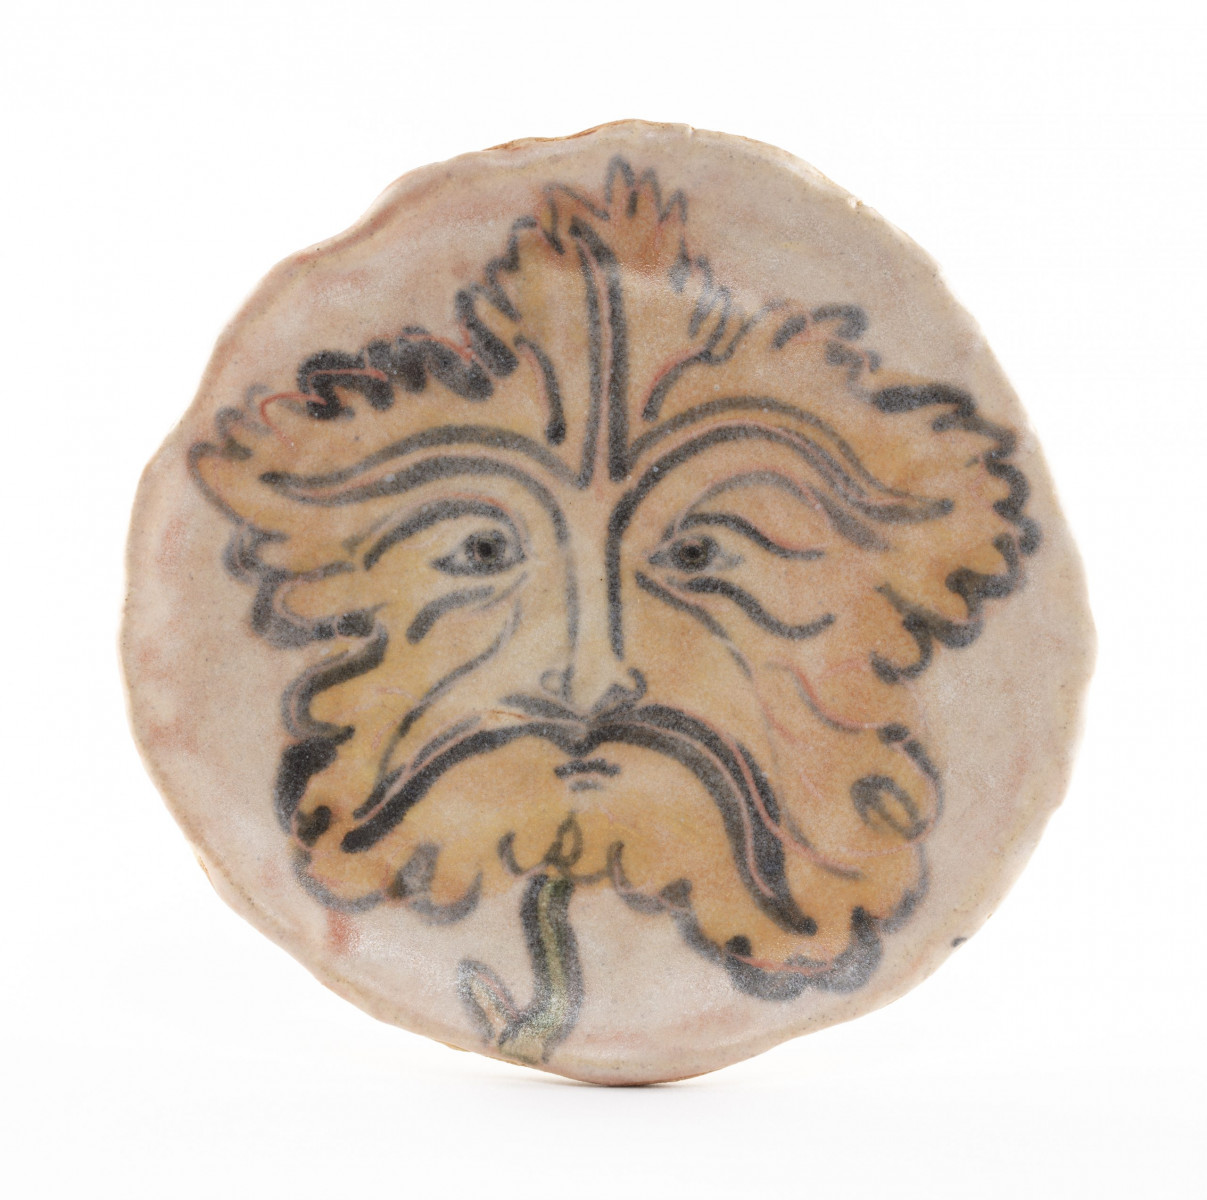 Kevin McNamee-Tweed. <em>Villard's Leaf Face</em>, 2023. Glazed ceramic, 4 3/4 x 4 7/8 inches  (12.1 x 12.4 cm)